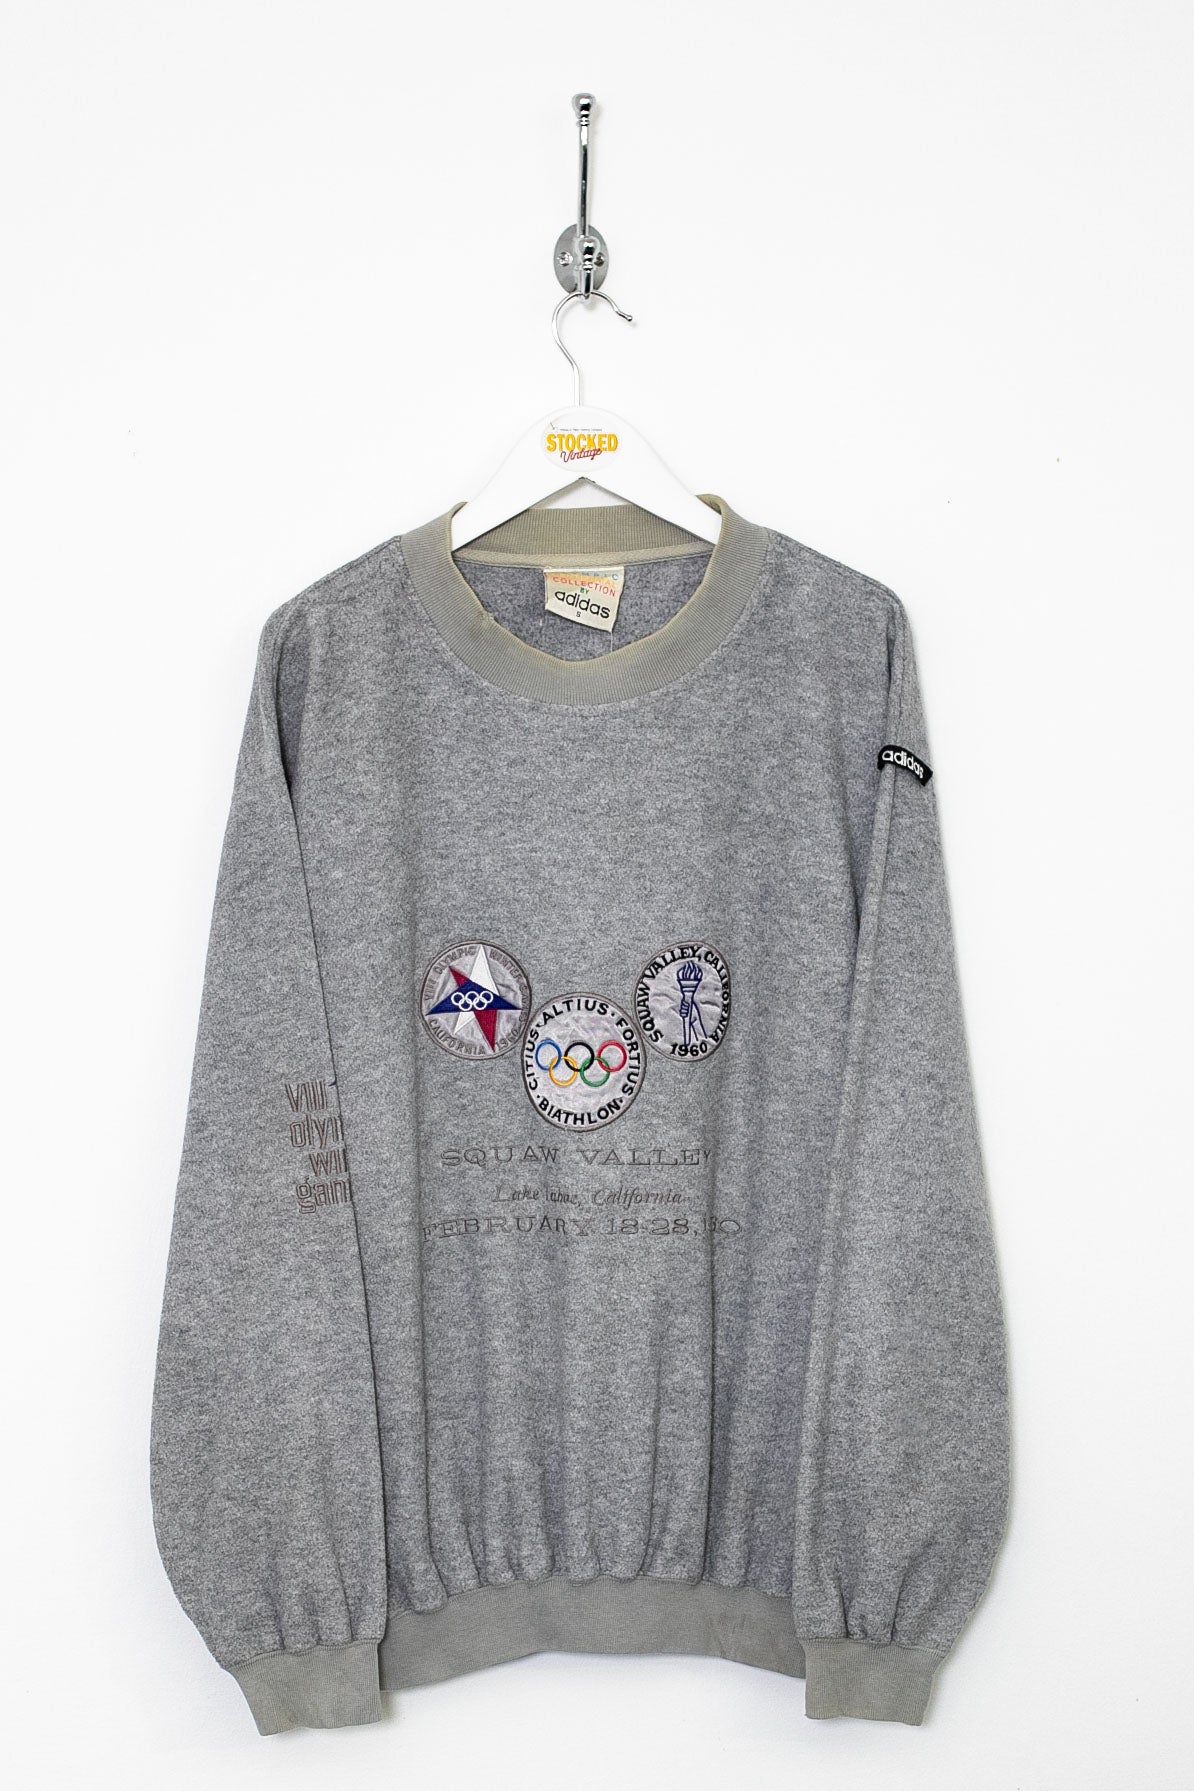 Rare 90s Adidas Olympics Fleece Sweatshirt (M)